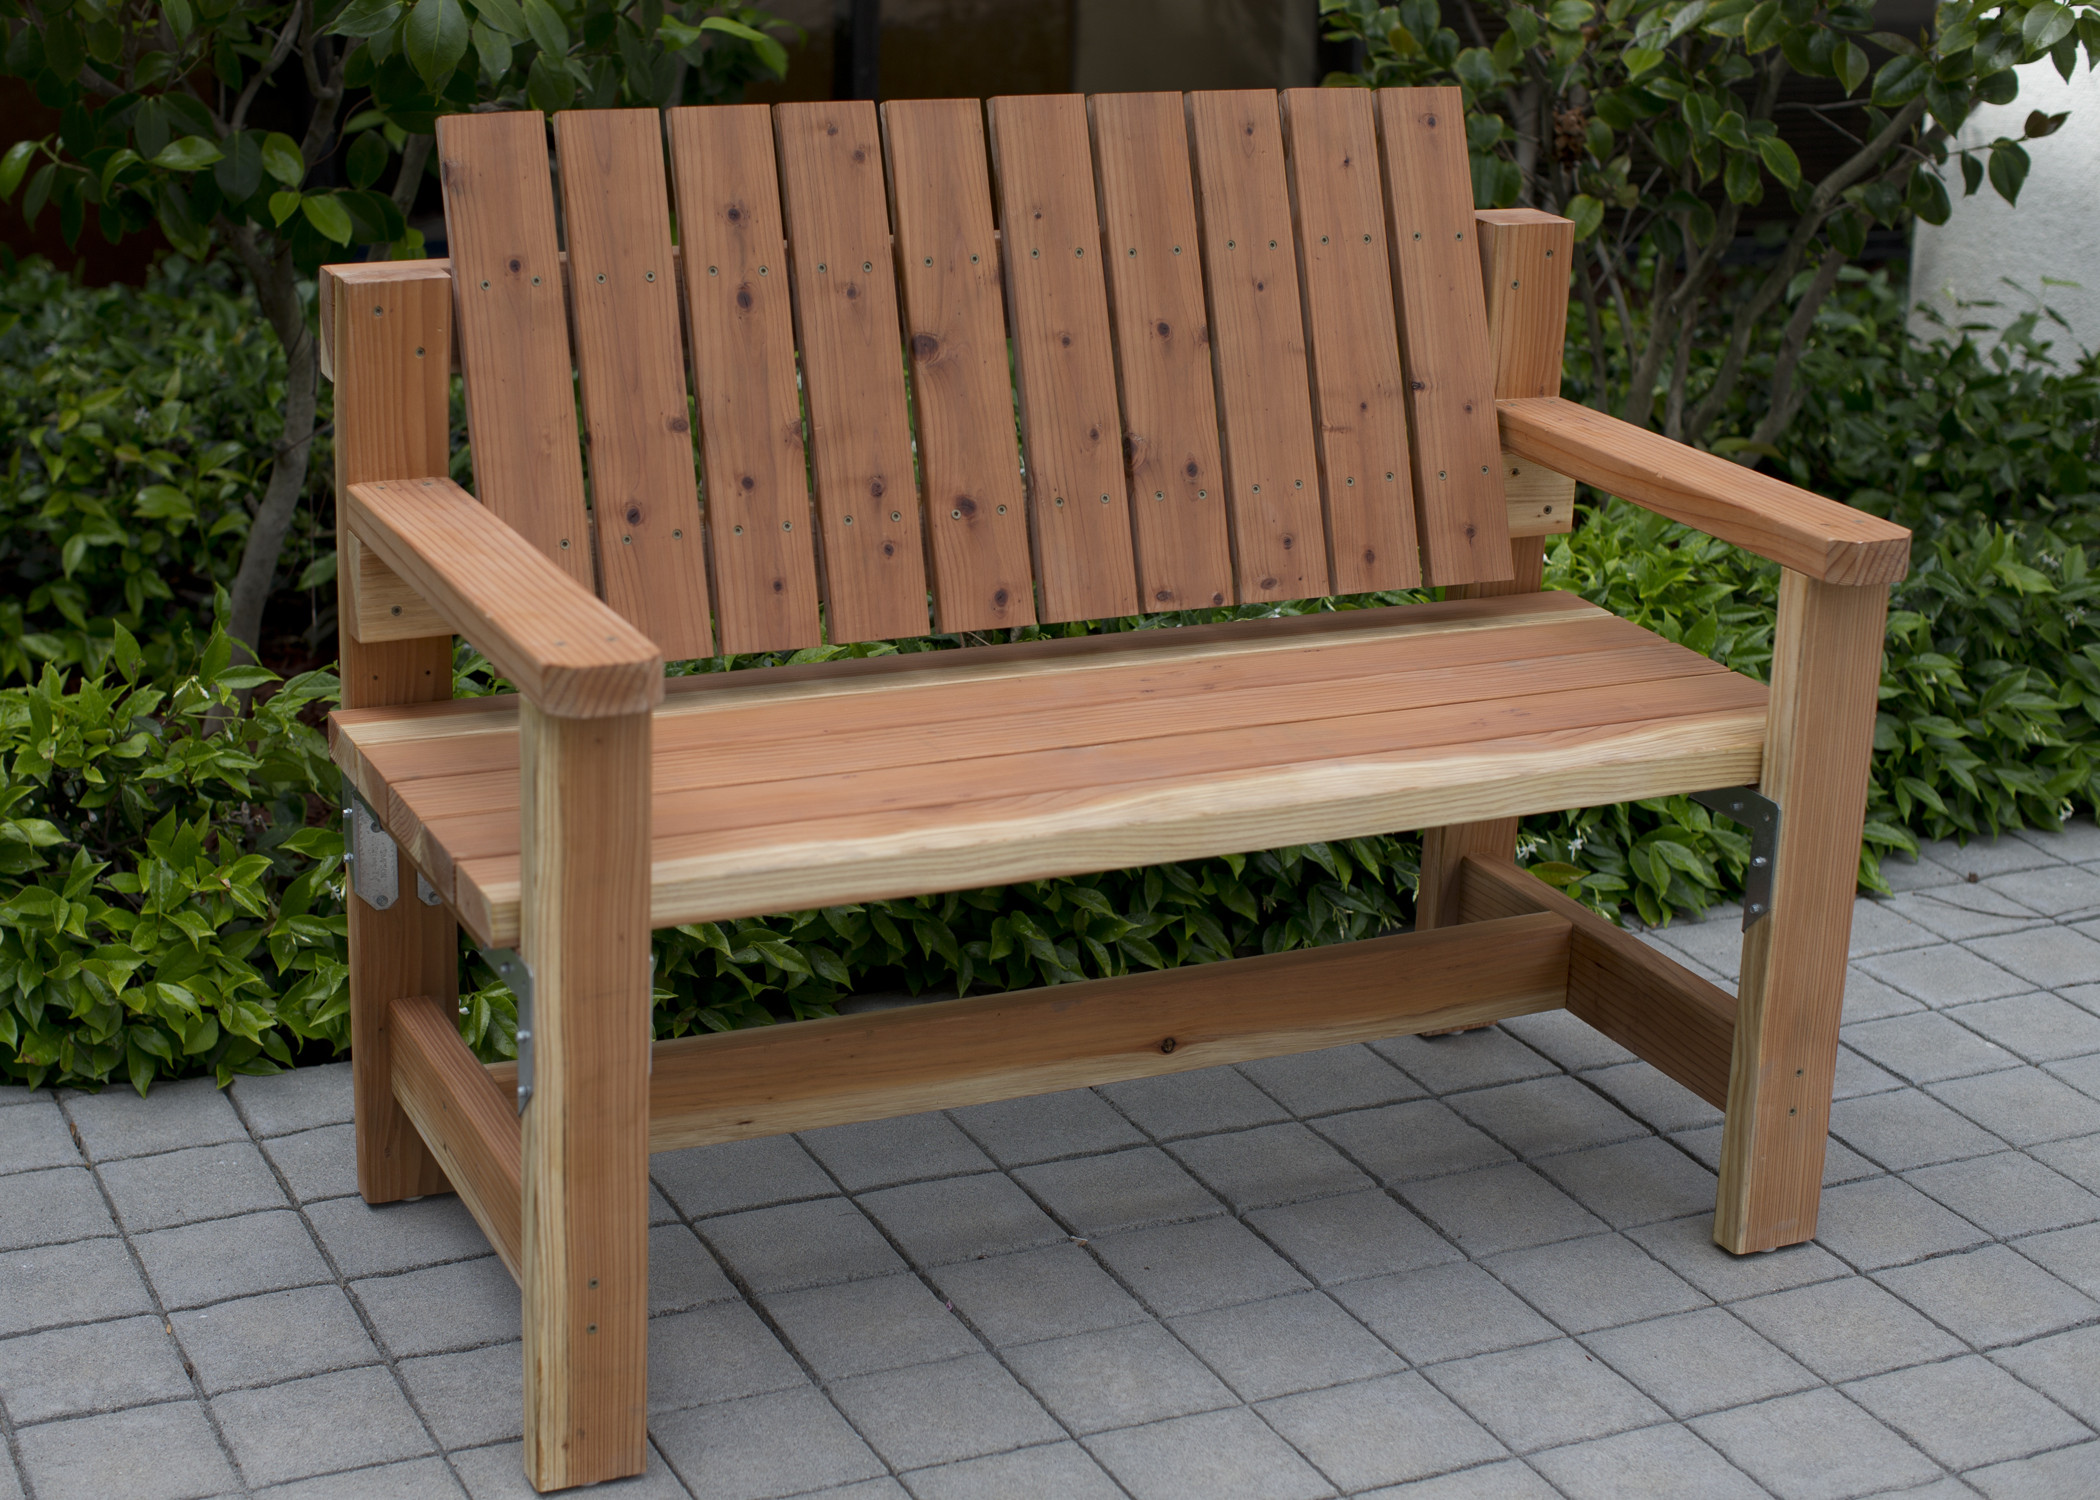 DIY Outdoor Wooden Bench
 DIY Garden Bench Preview DIY Done Right